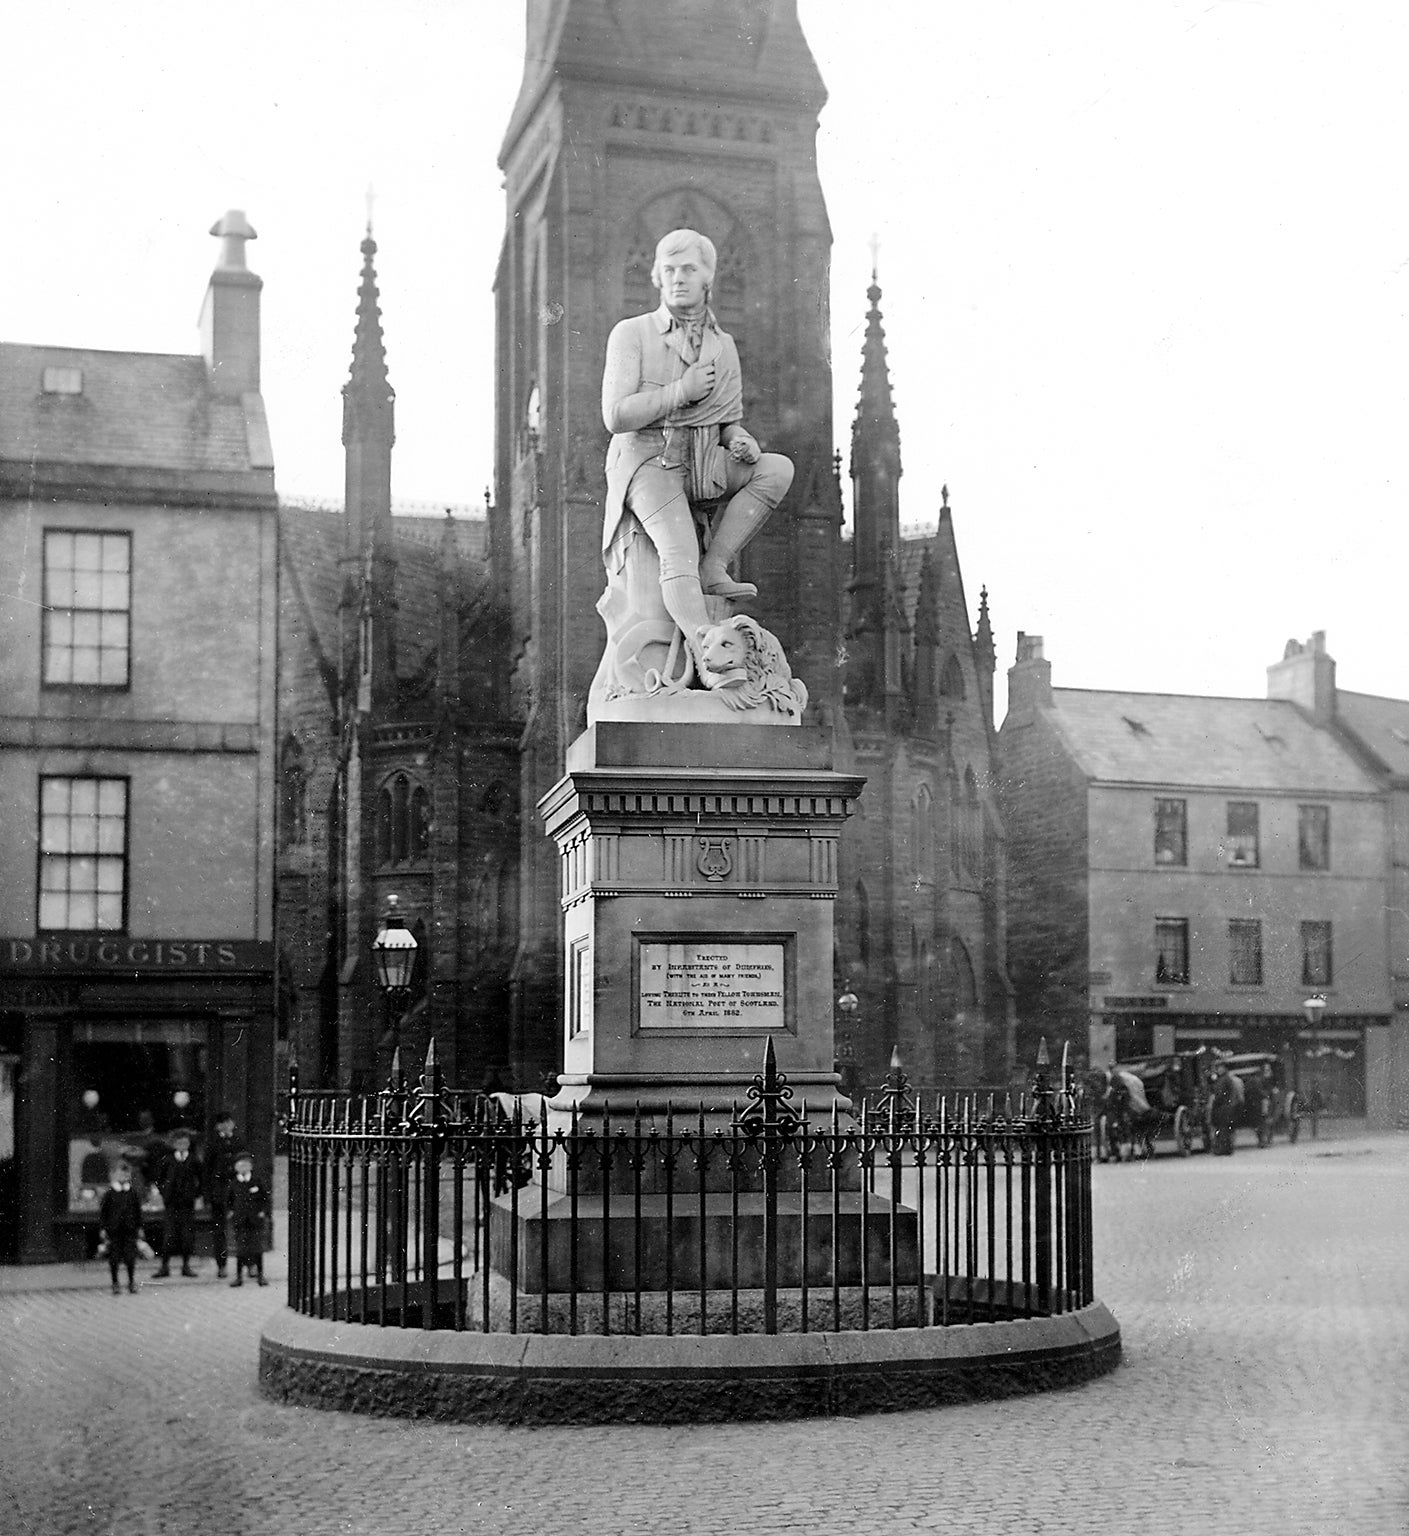 The Robert Burns monument stands as a memorial in Dumfries, Scotland, circa 1910